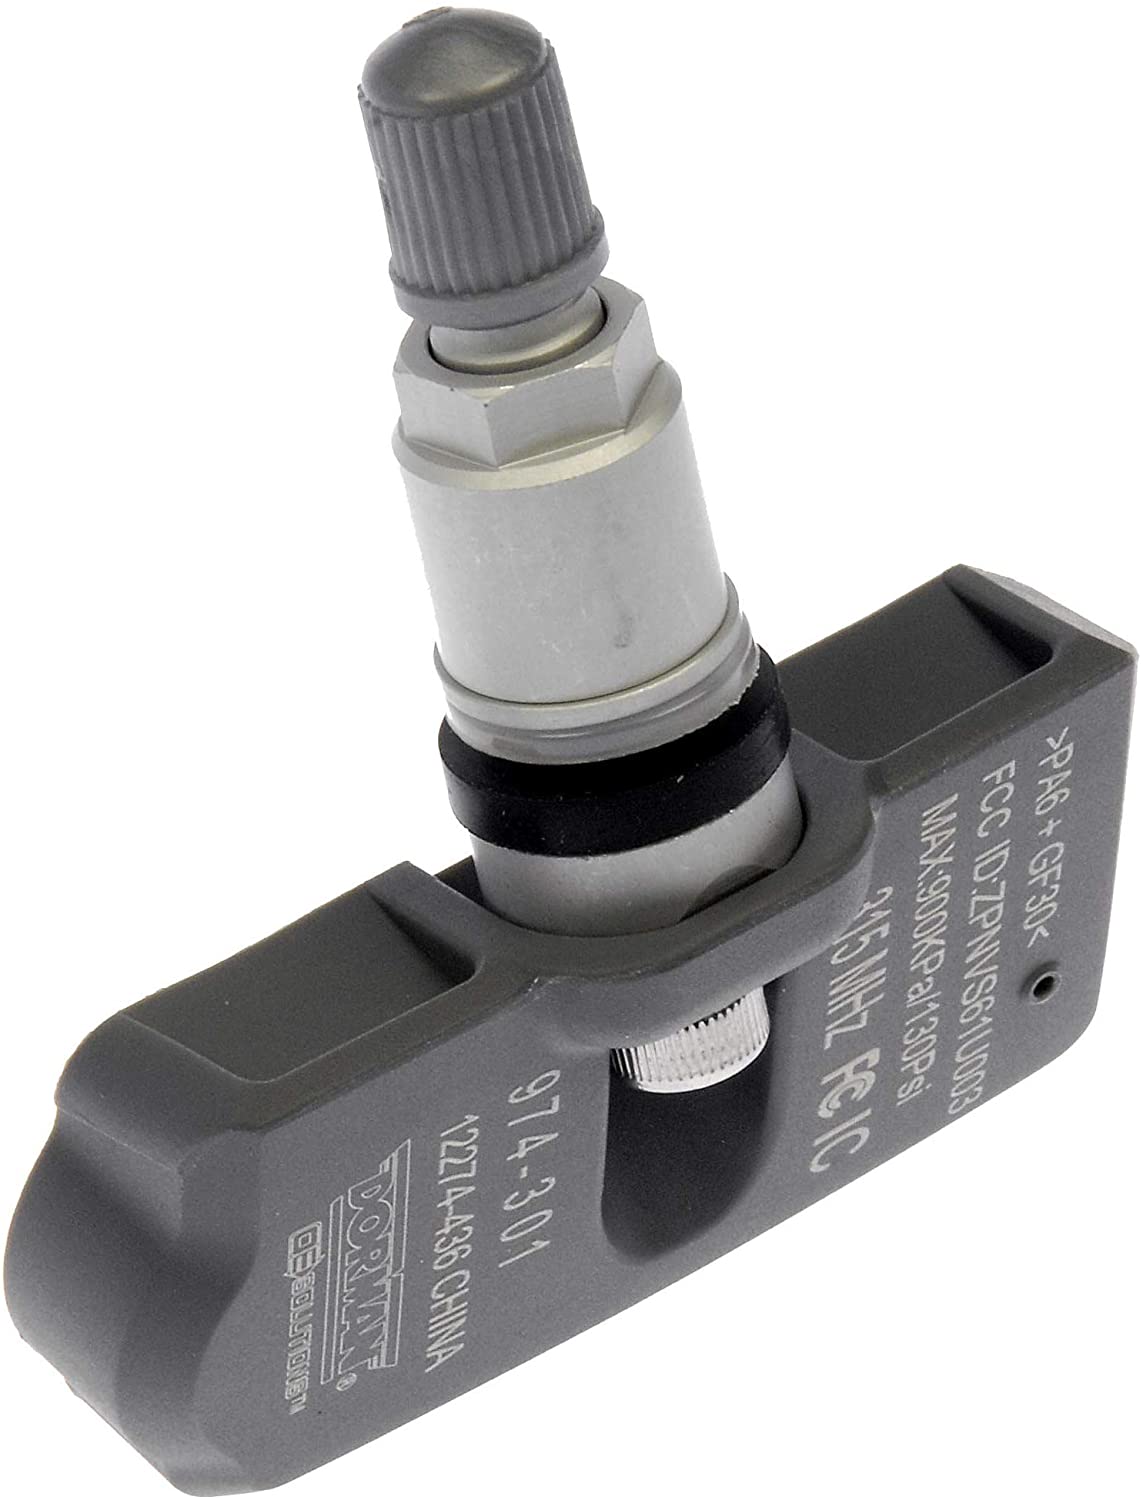 Dorman 974-301 Programmable Tire Pressure Monitoring System Sensor for Select Models